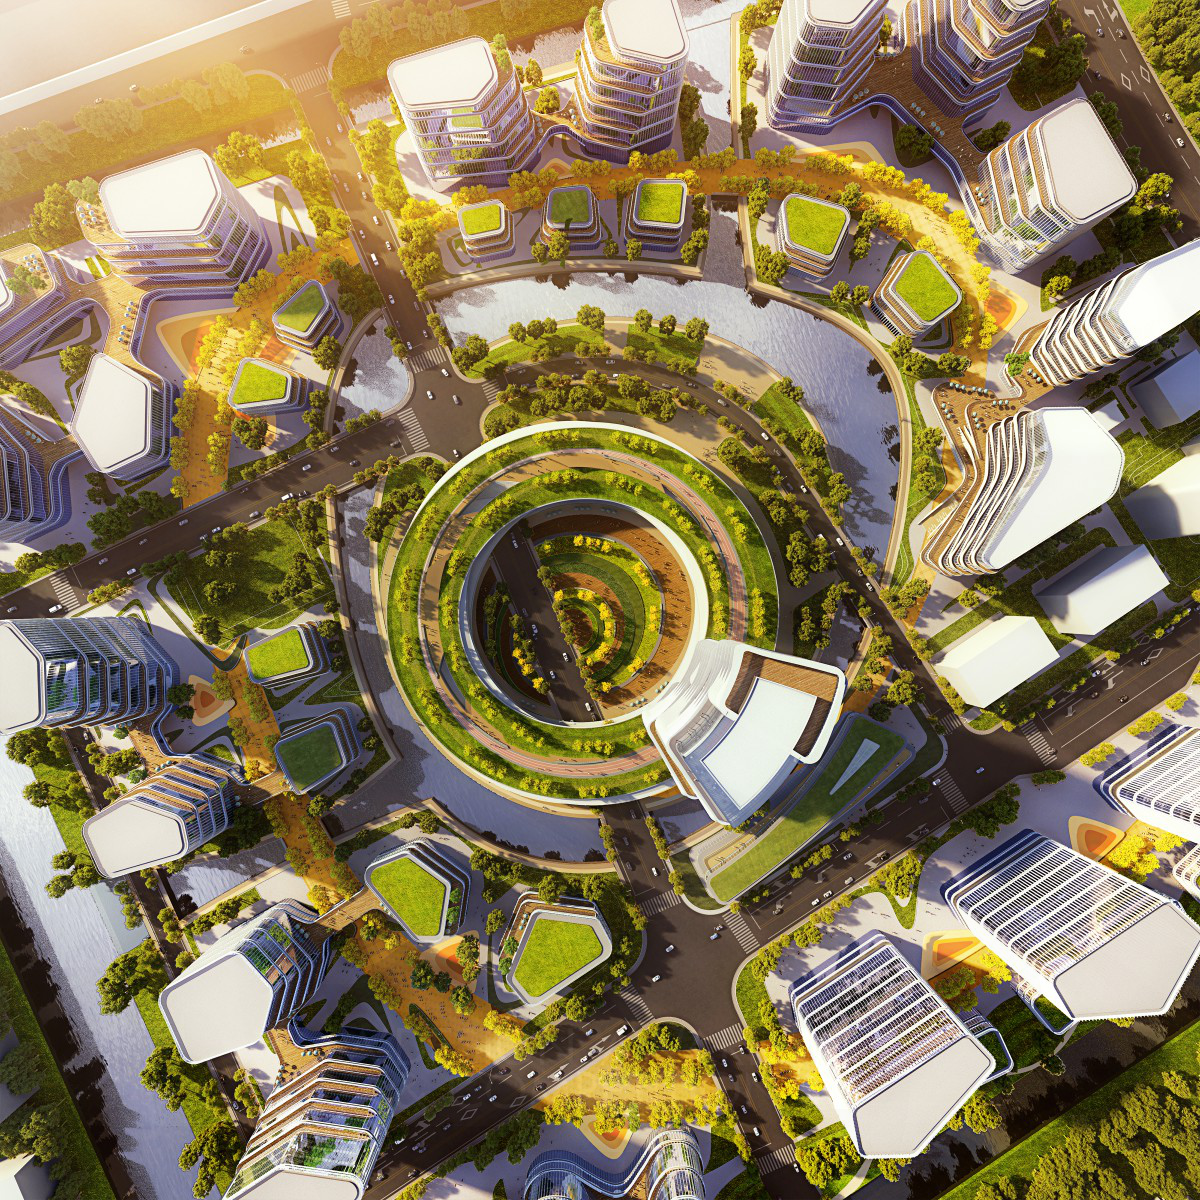 Liu Jinrui's Innovative Fibonacci Spiral Project